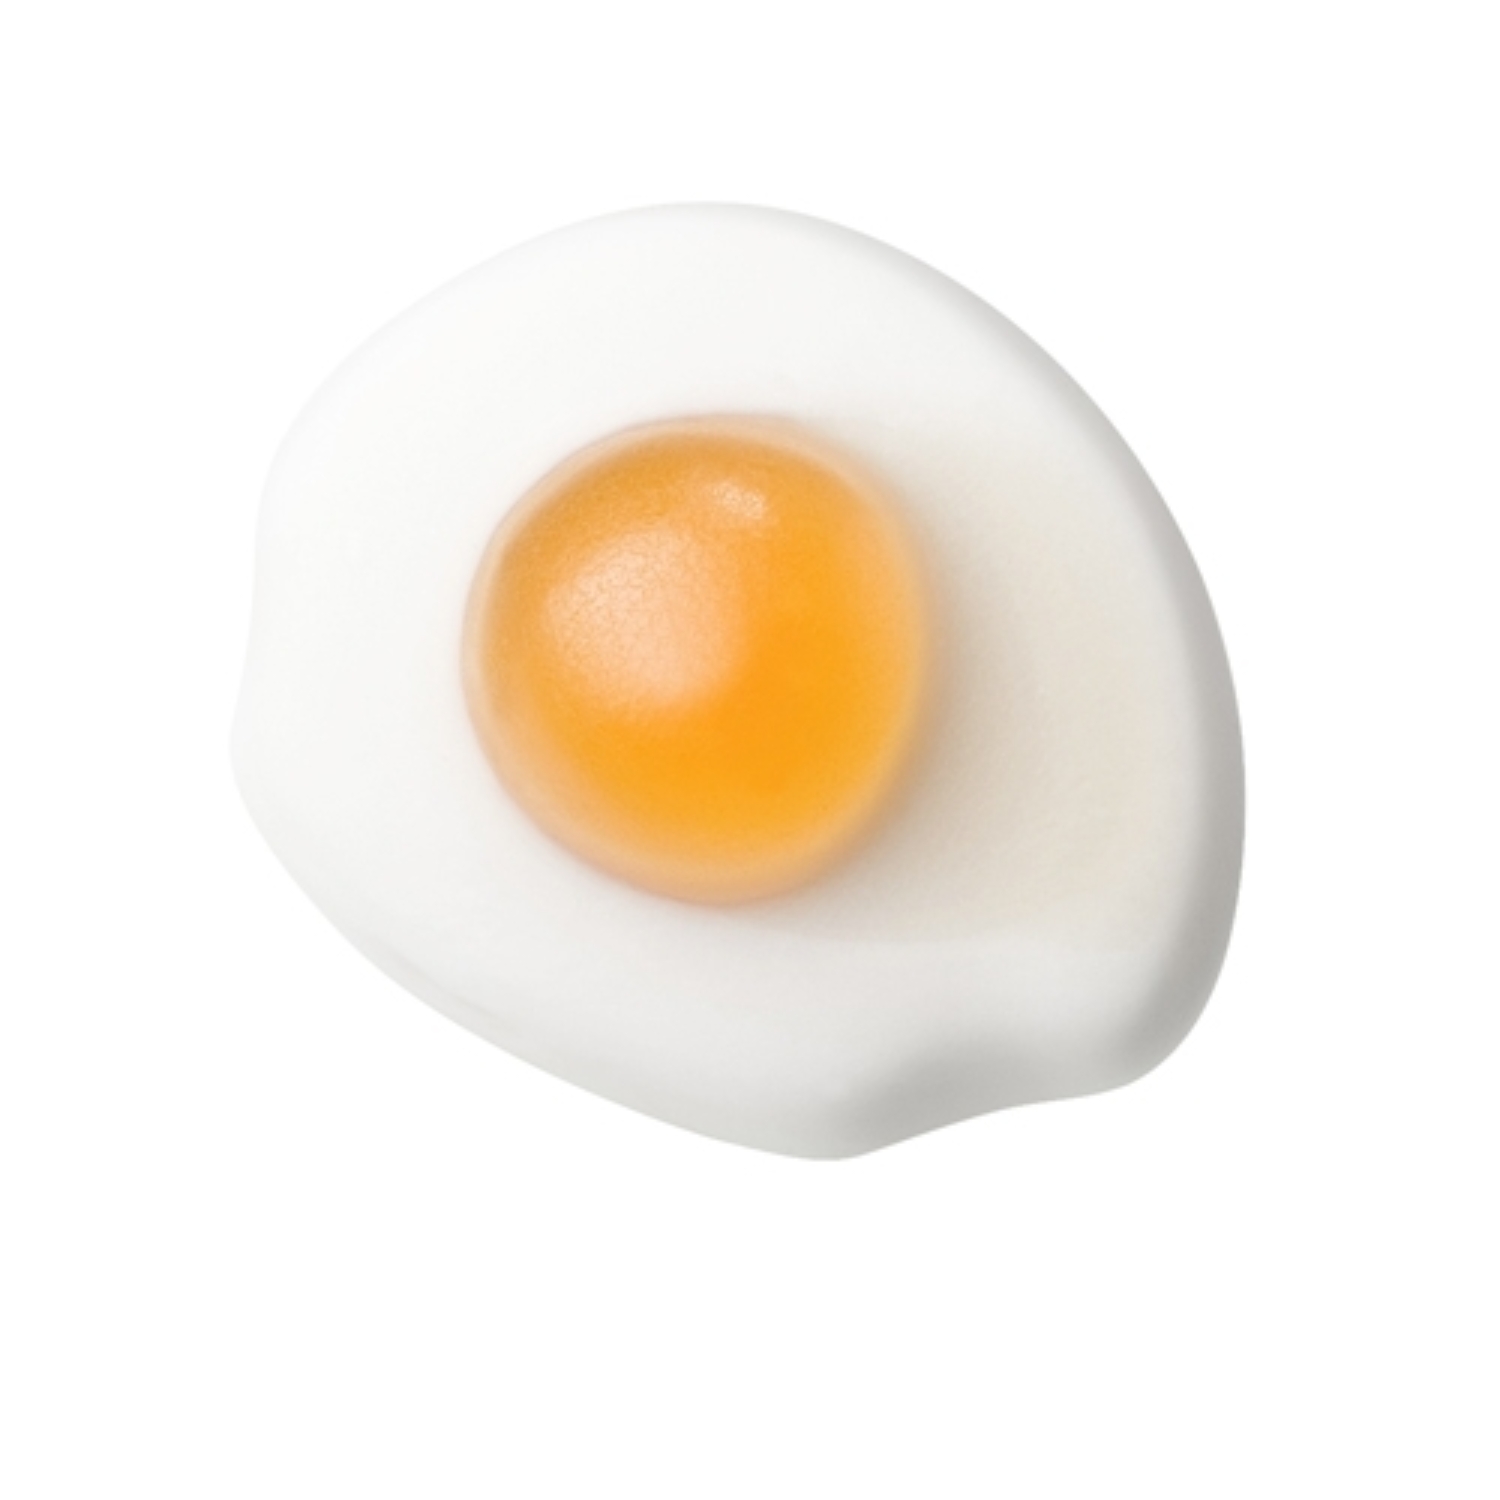 Куриное яйцо без белка. Желток яйца. Белок яйца. Белок и желток. Яичный желток без фона.